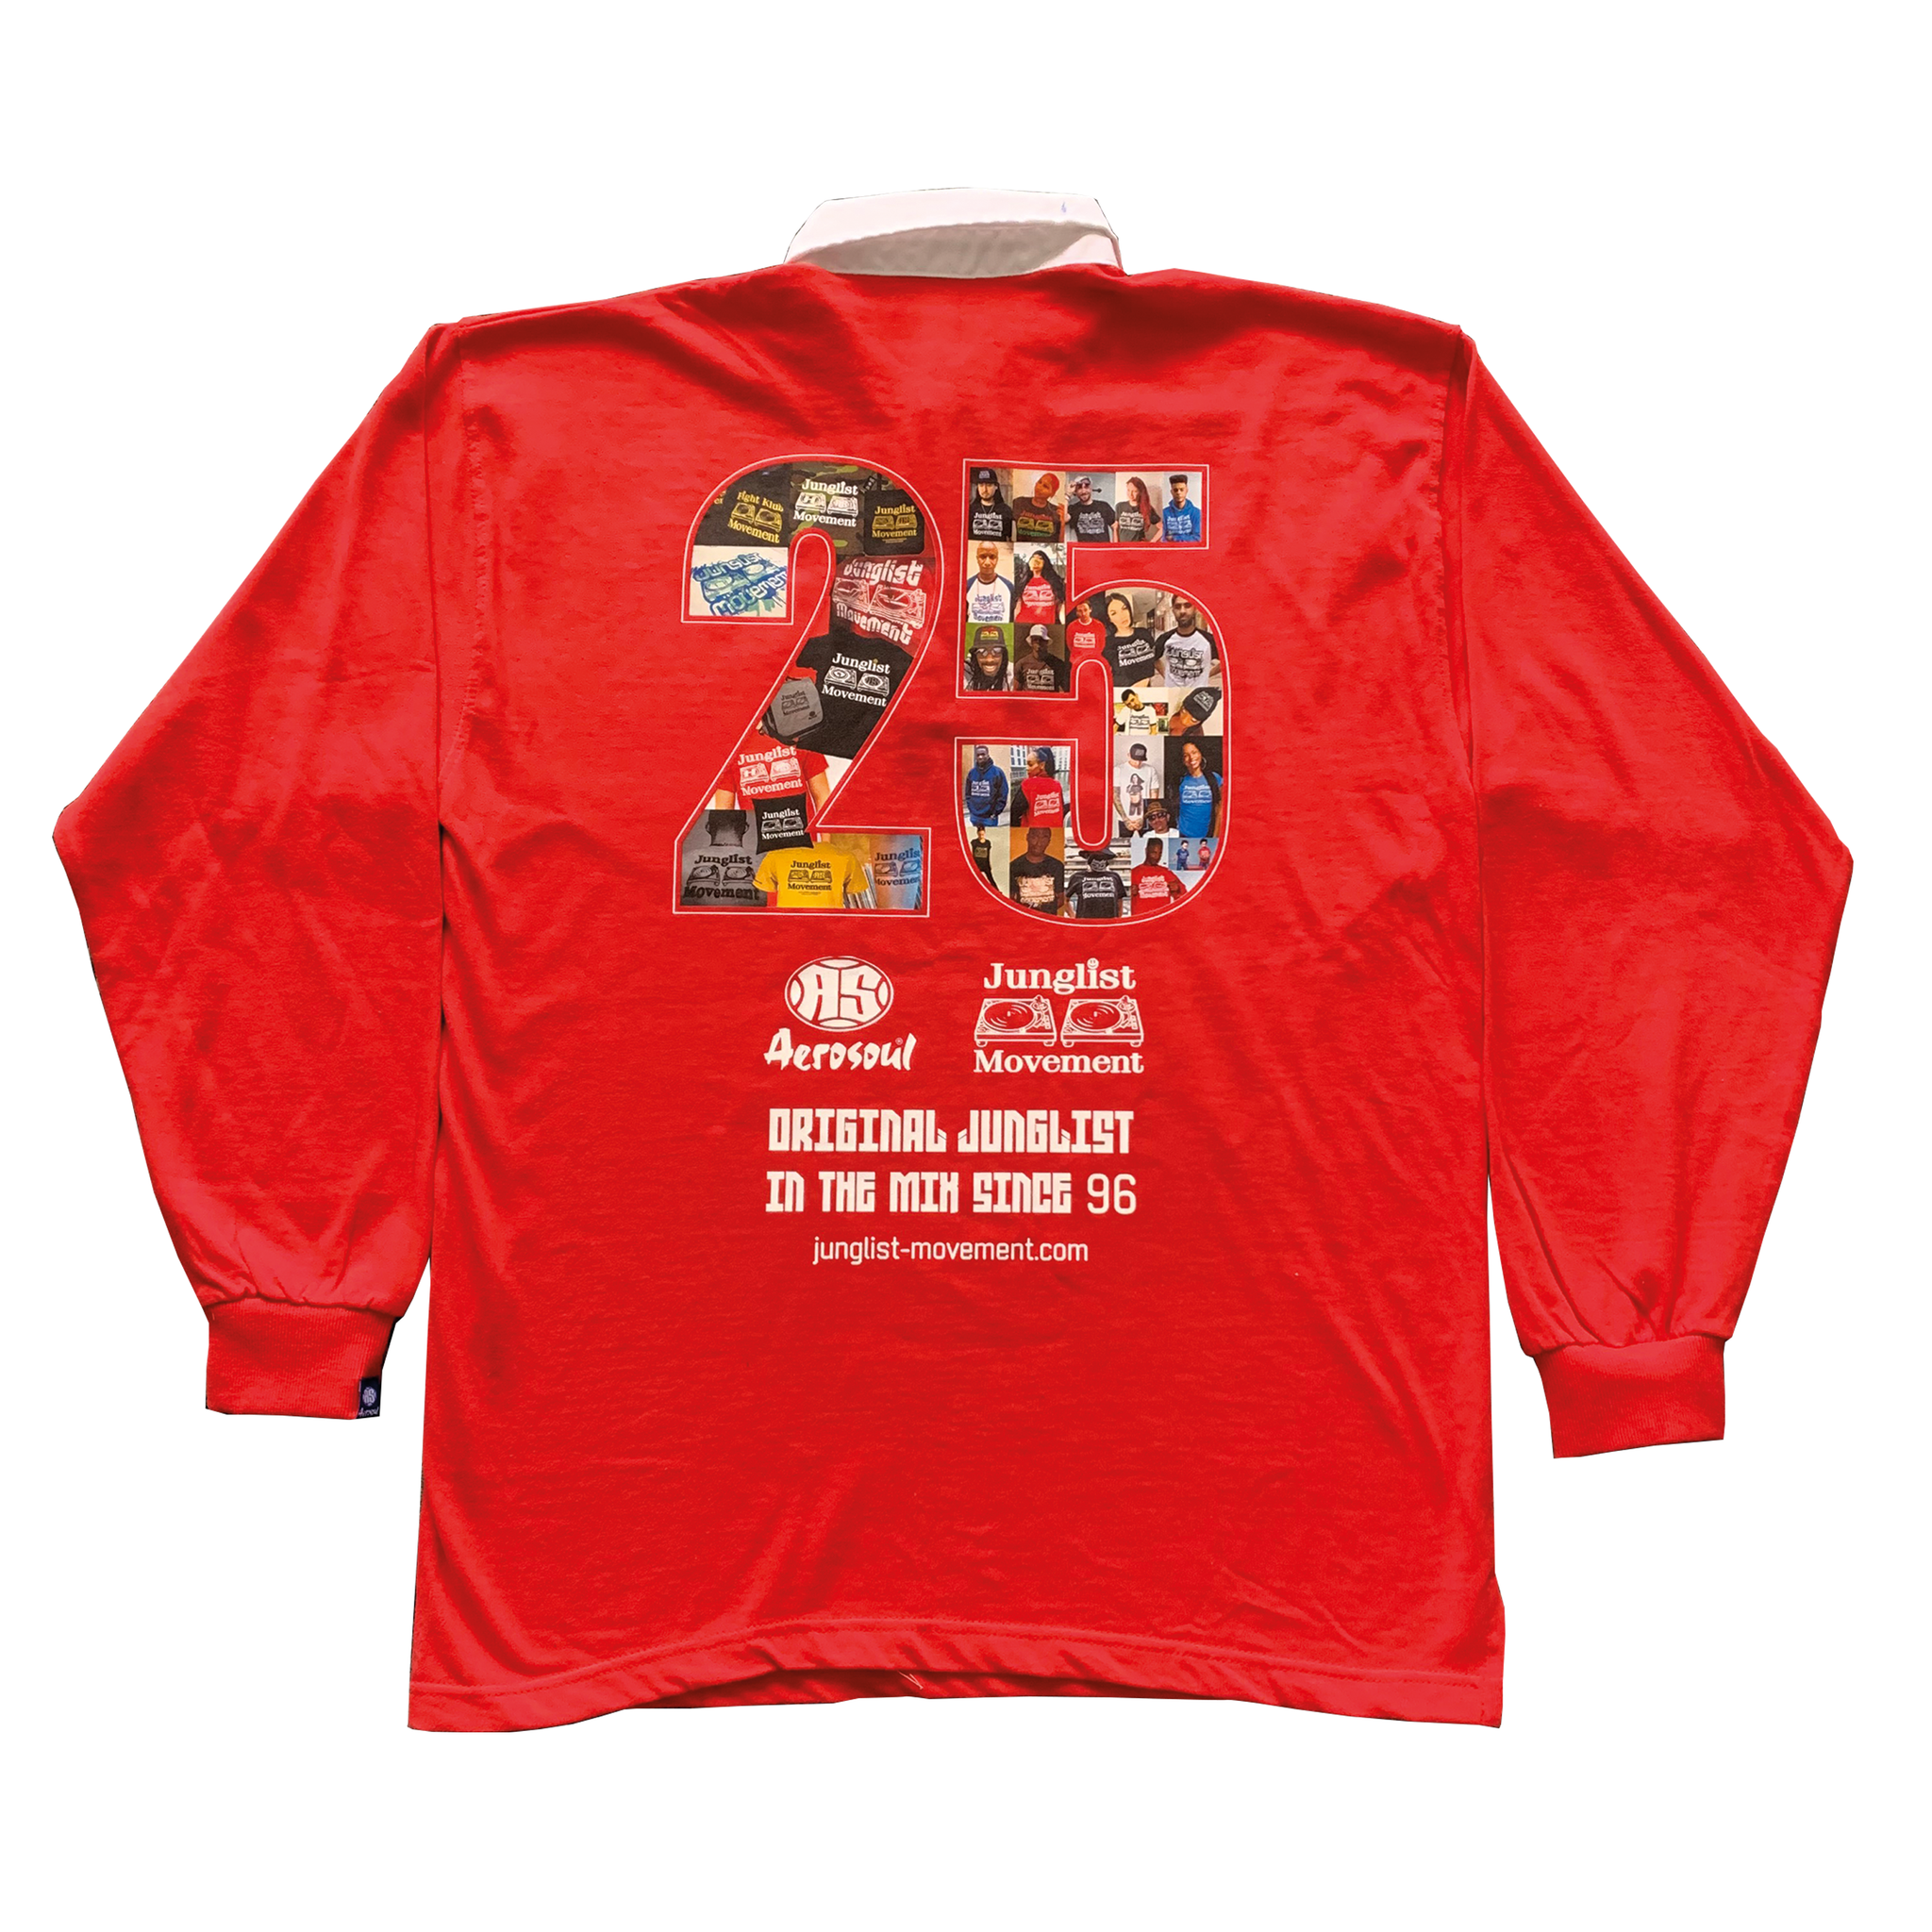 Aerosoul Junglist Movement 25 Year Anniversary  O.J. Rugby Shirt (red)